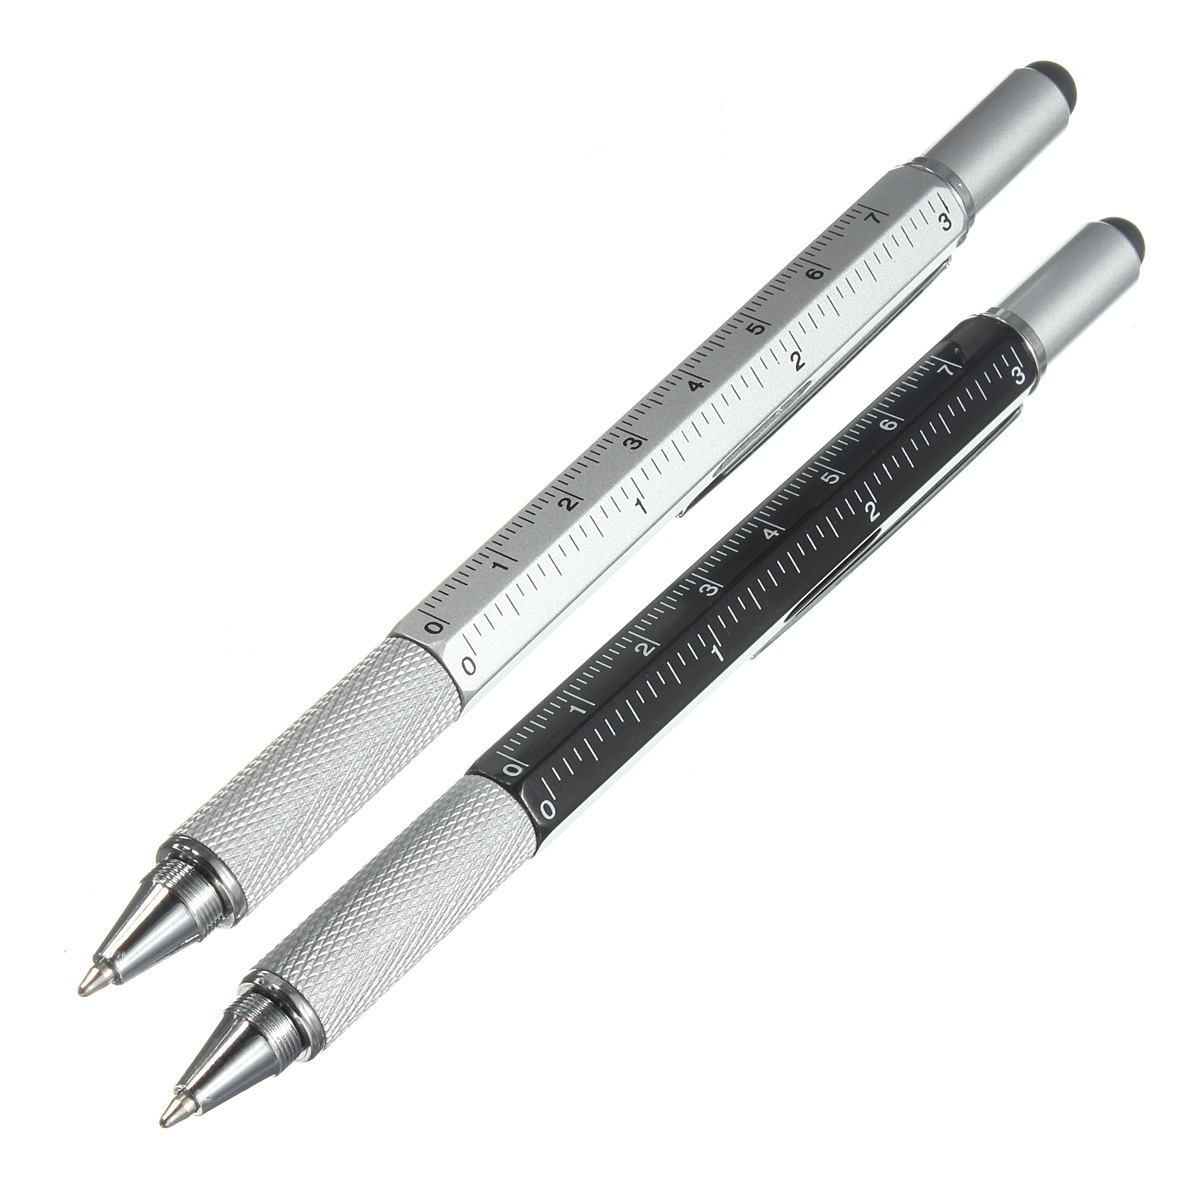 6 in 1 Metal Multitool Pen Handy Screwdriver Ruler Spirit Level 2